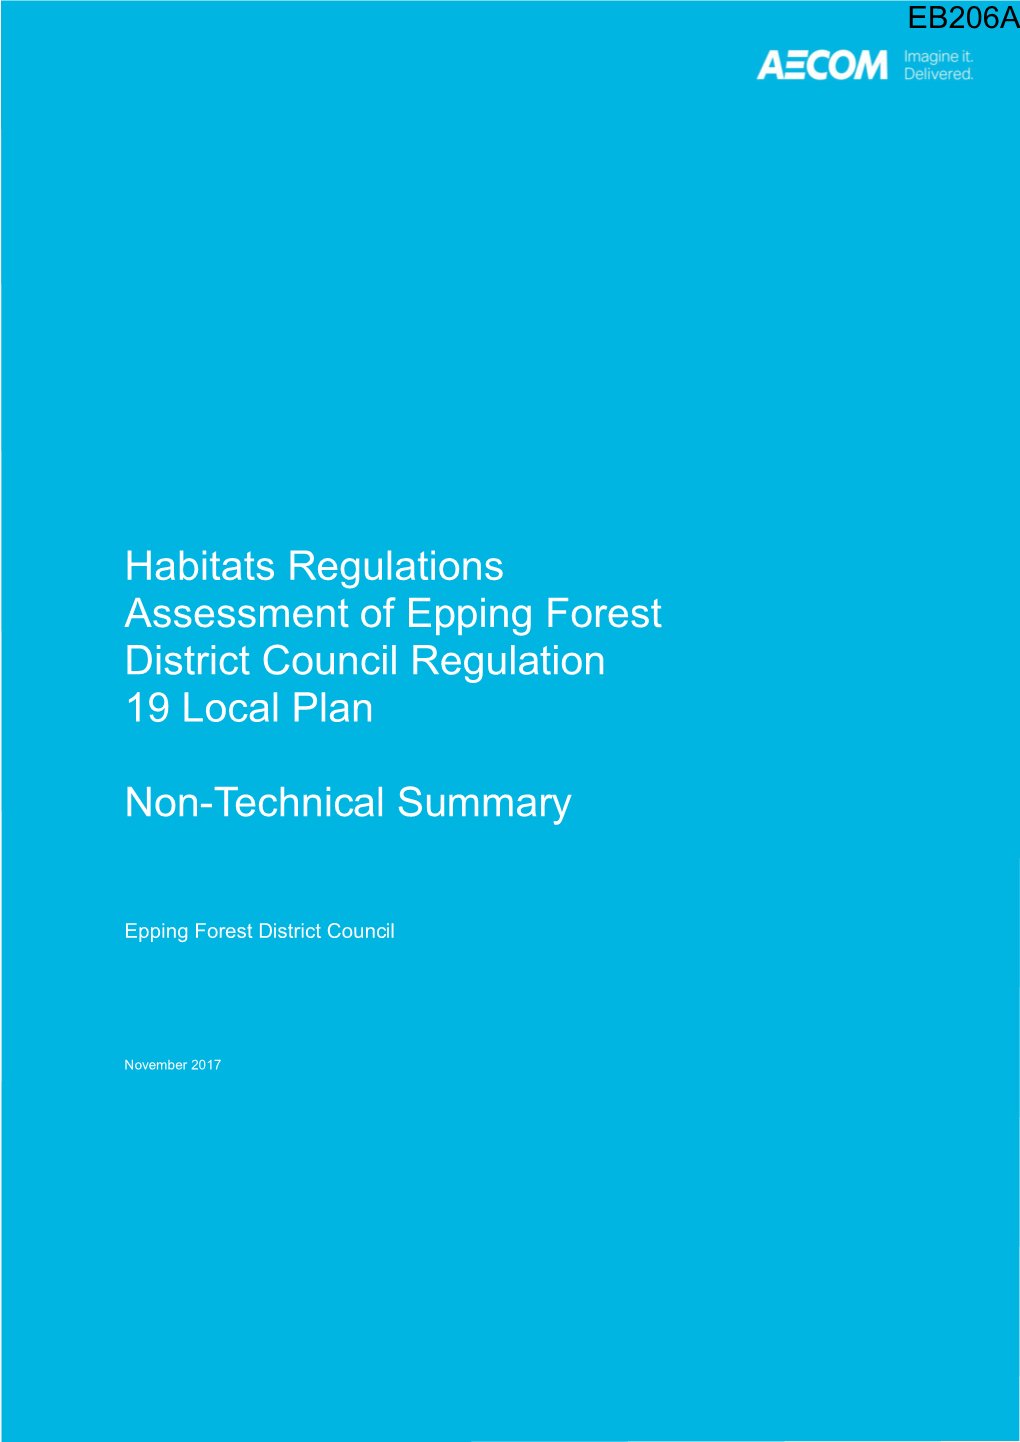 Habitats Regulations Assessment Non-Technical Summary